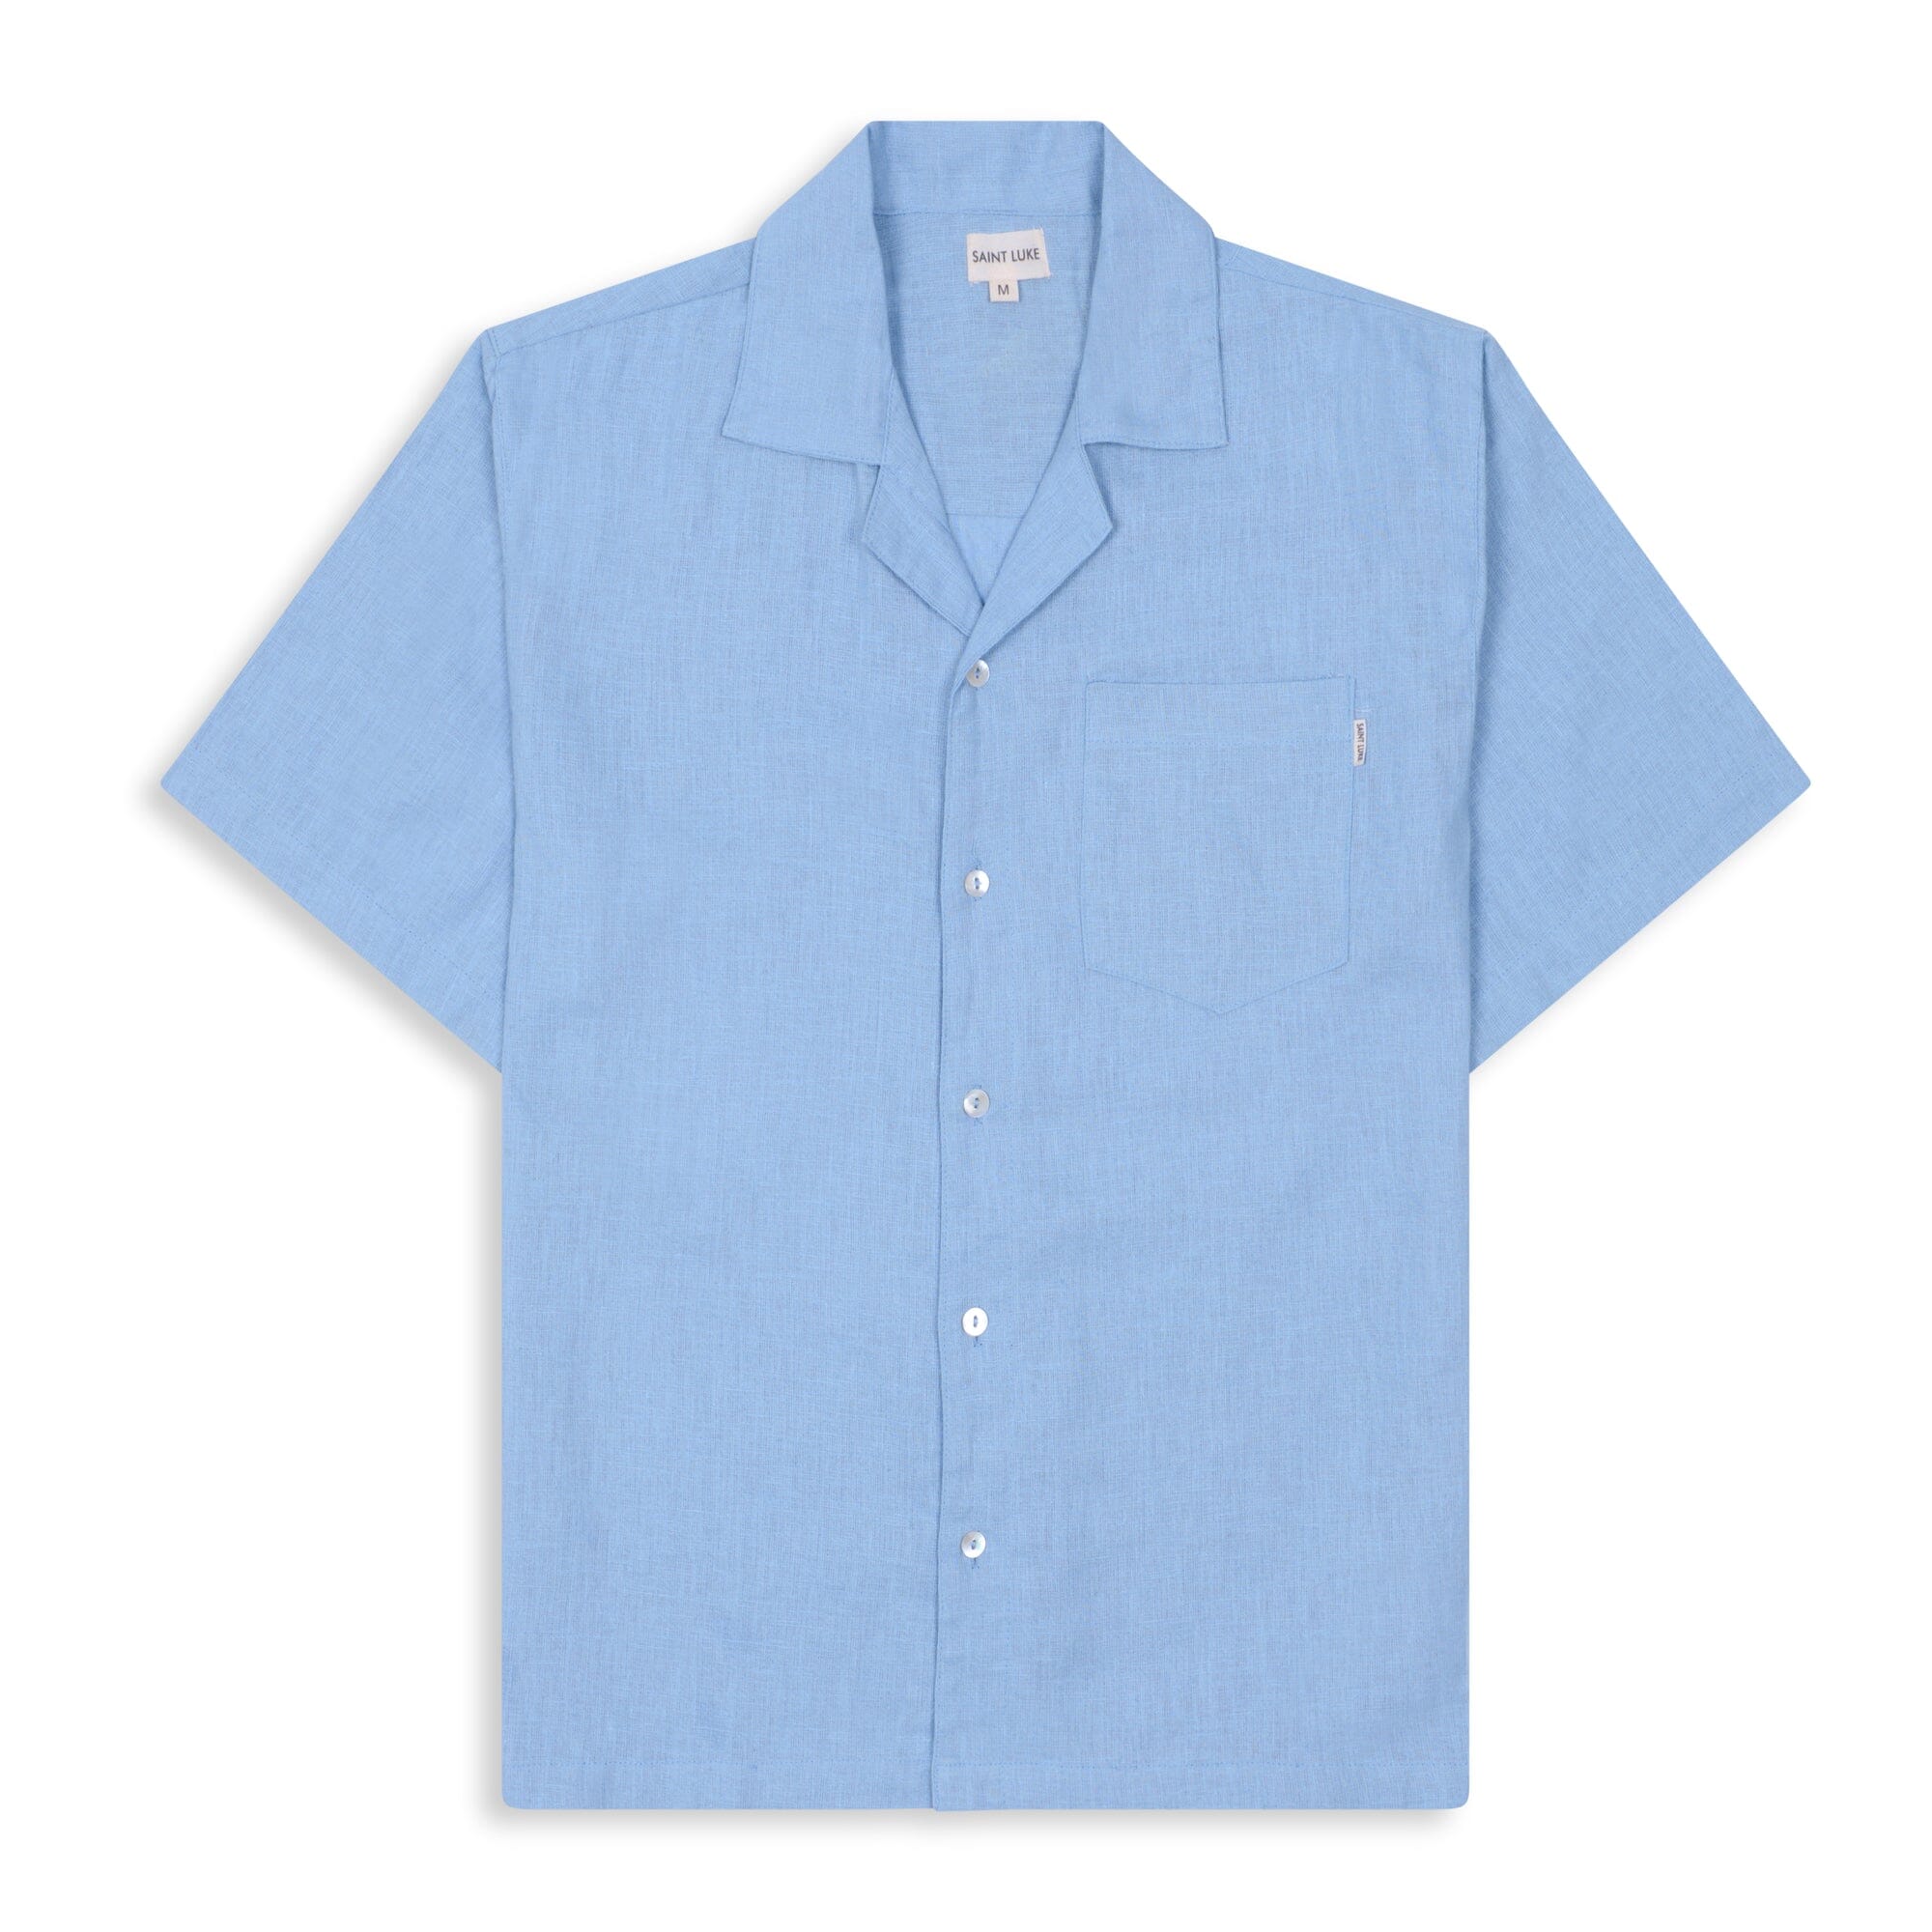 Saint Luke Bequia Linen Shirt in Glacier Blue